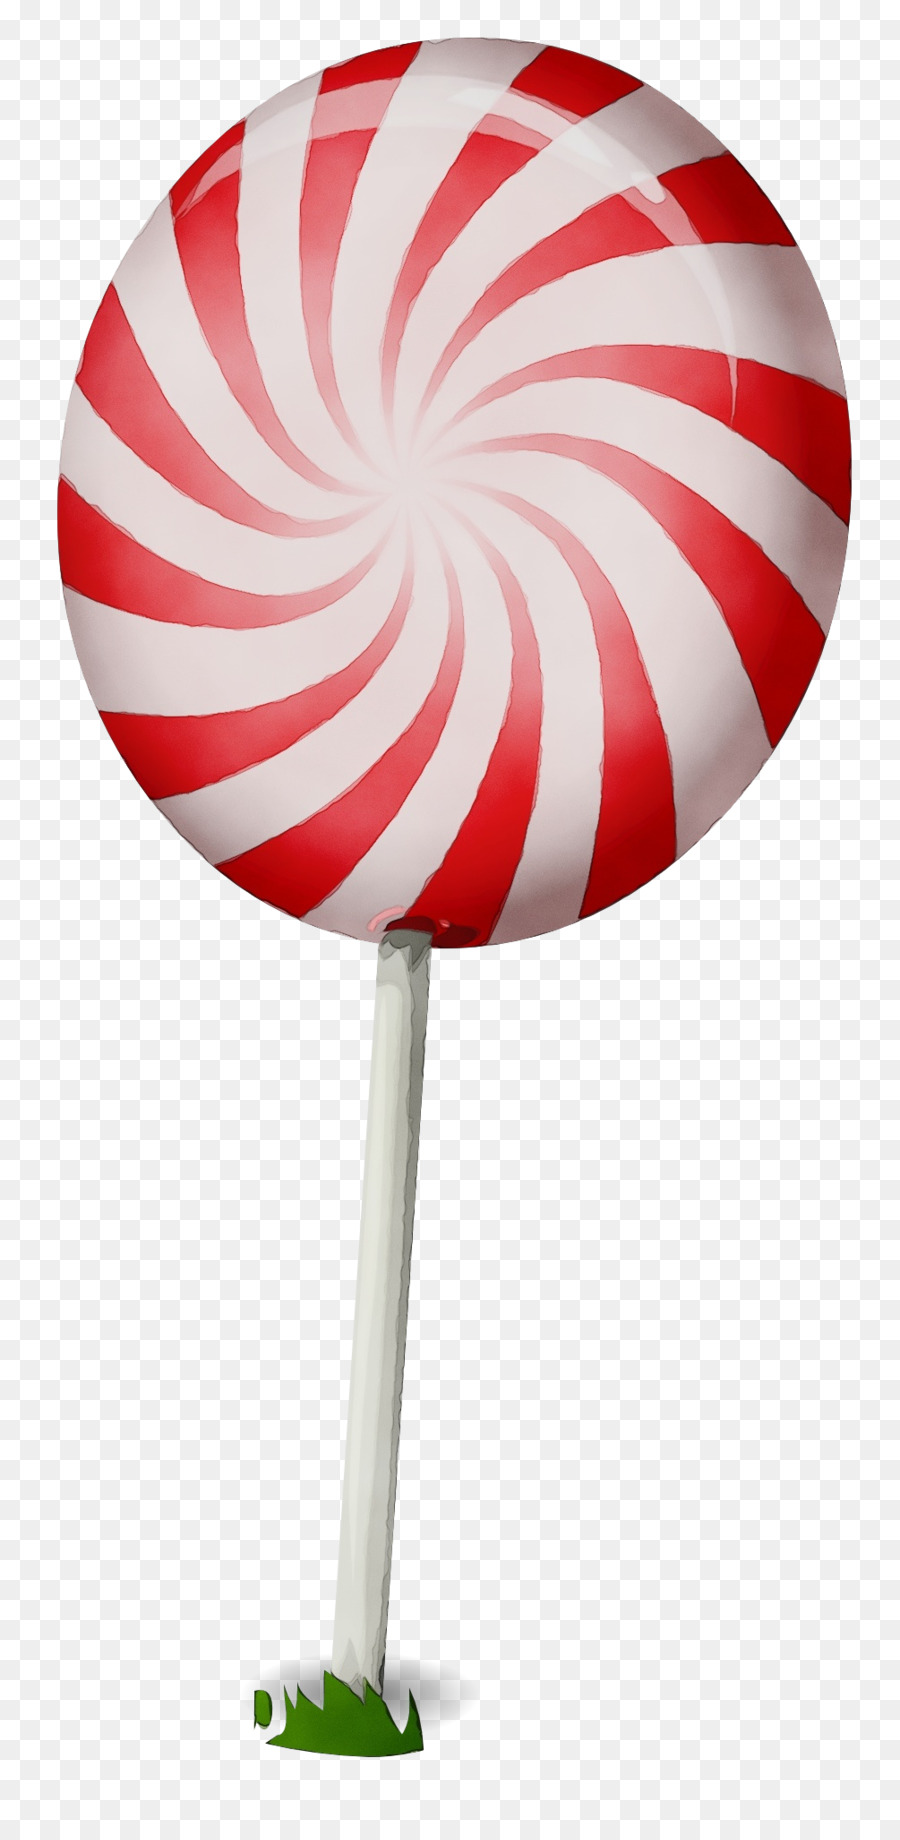 Lollipop Portable Network Graphics Grafica vettoriale Candy Clip art - 